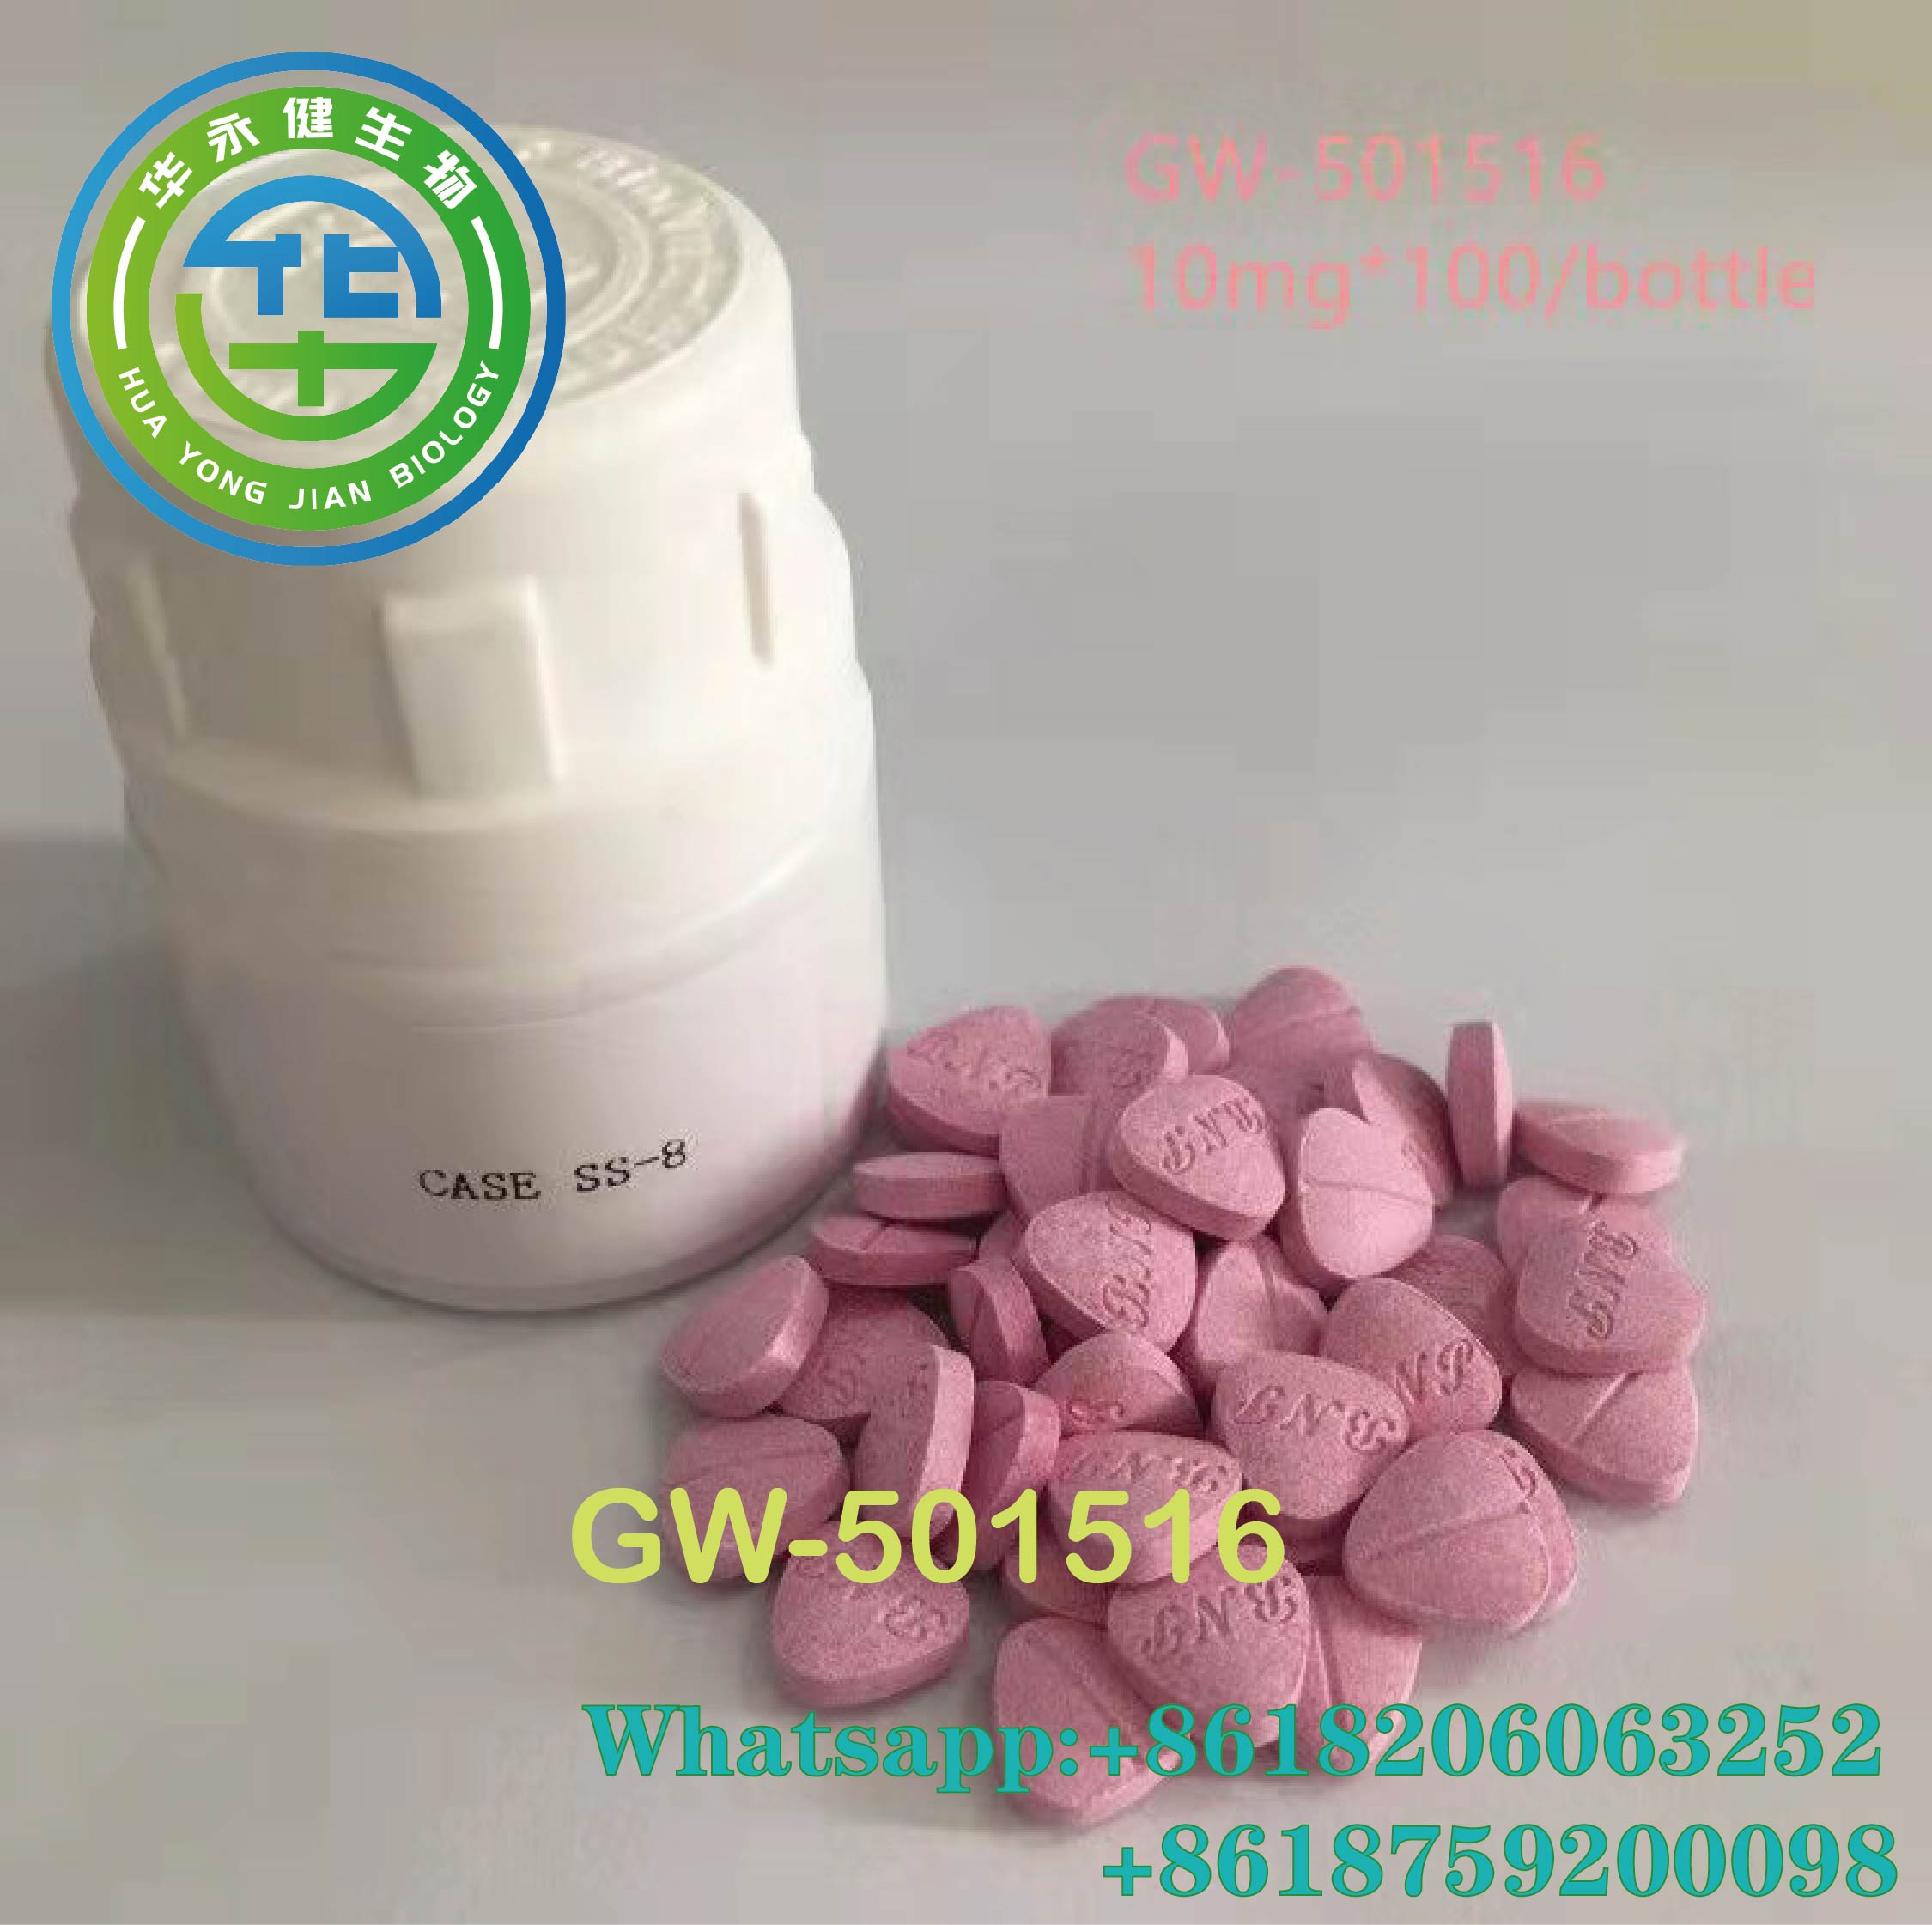 GW-501516 10mg Tablets Pharmaceutical Grade SARMs Cardarine 100pills/bottle CAS 317318-70-0 For Fat Loss